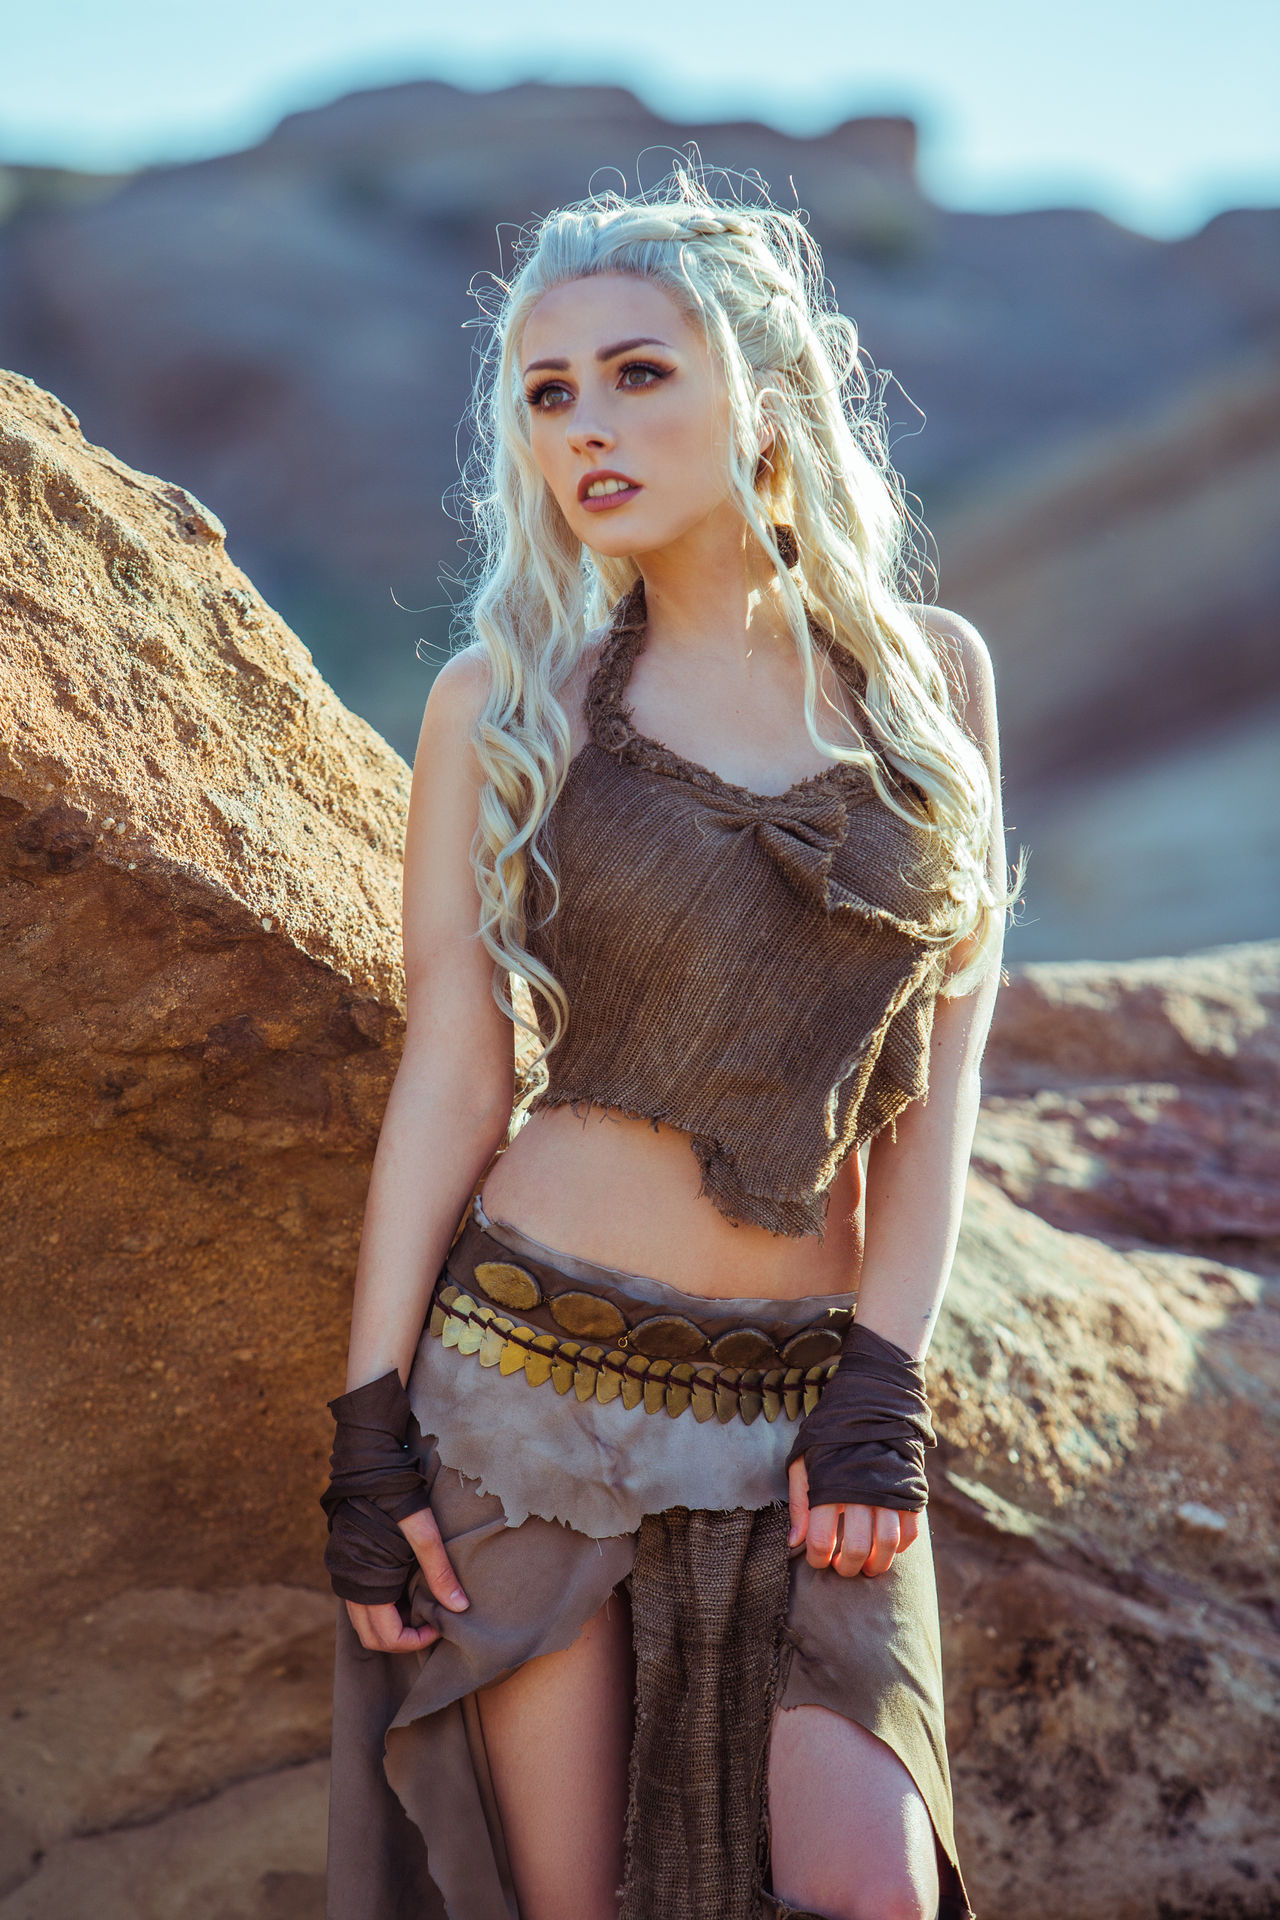 Best Lewd Daenerys Targaryen Cosplay - RolyatIsTaylor